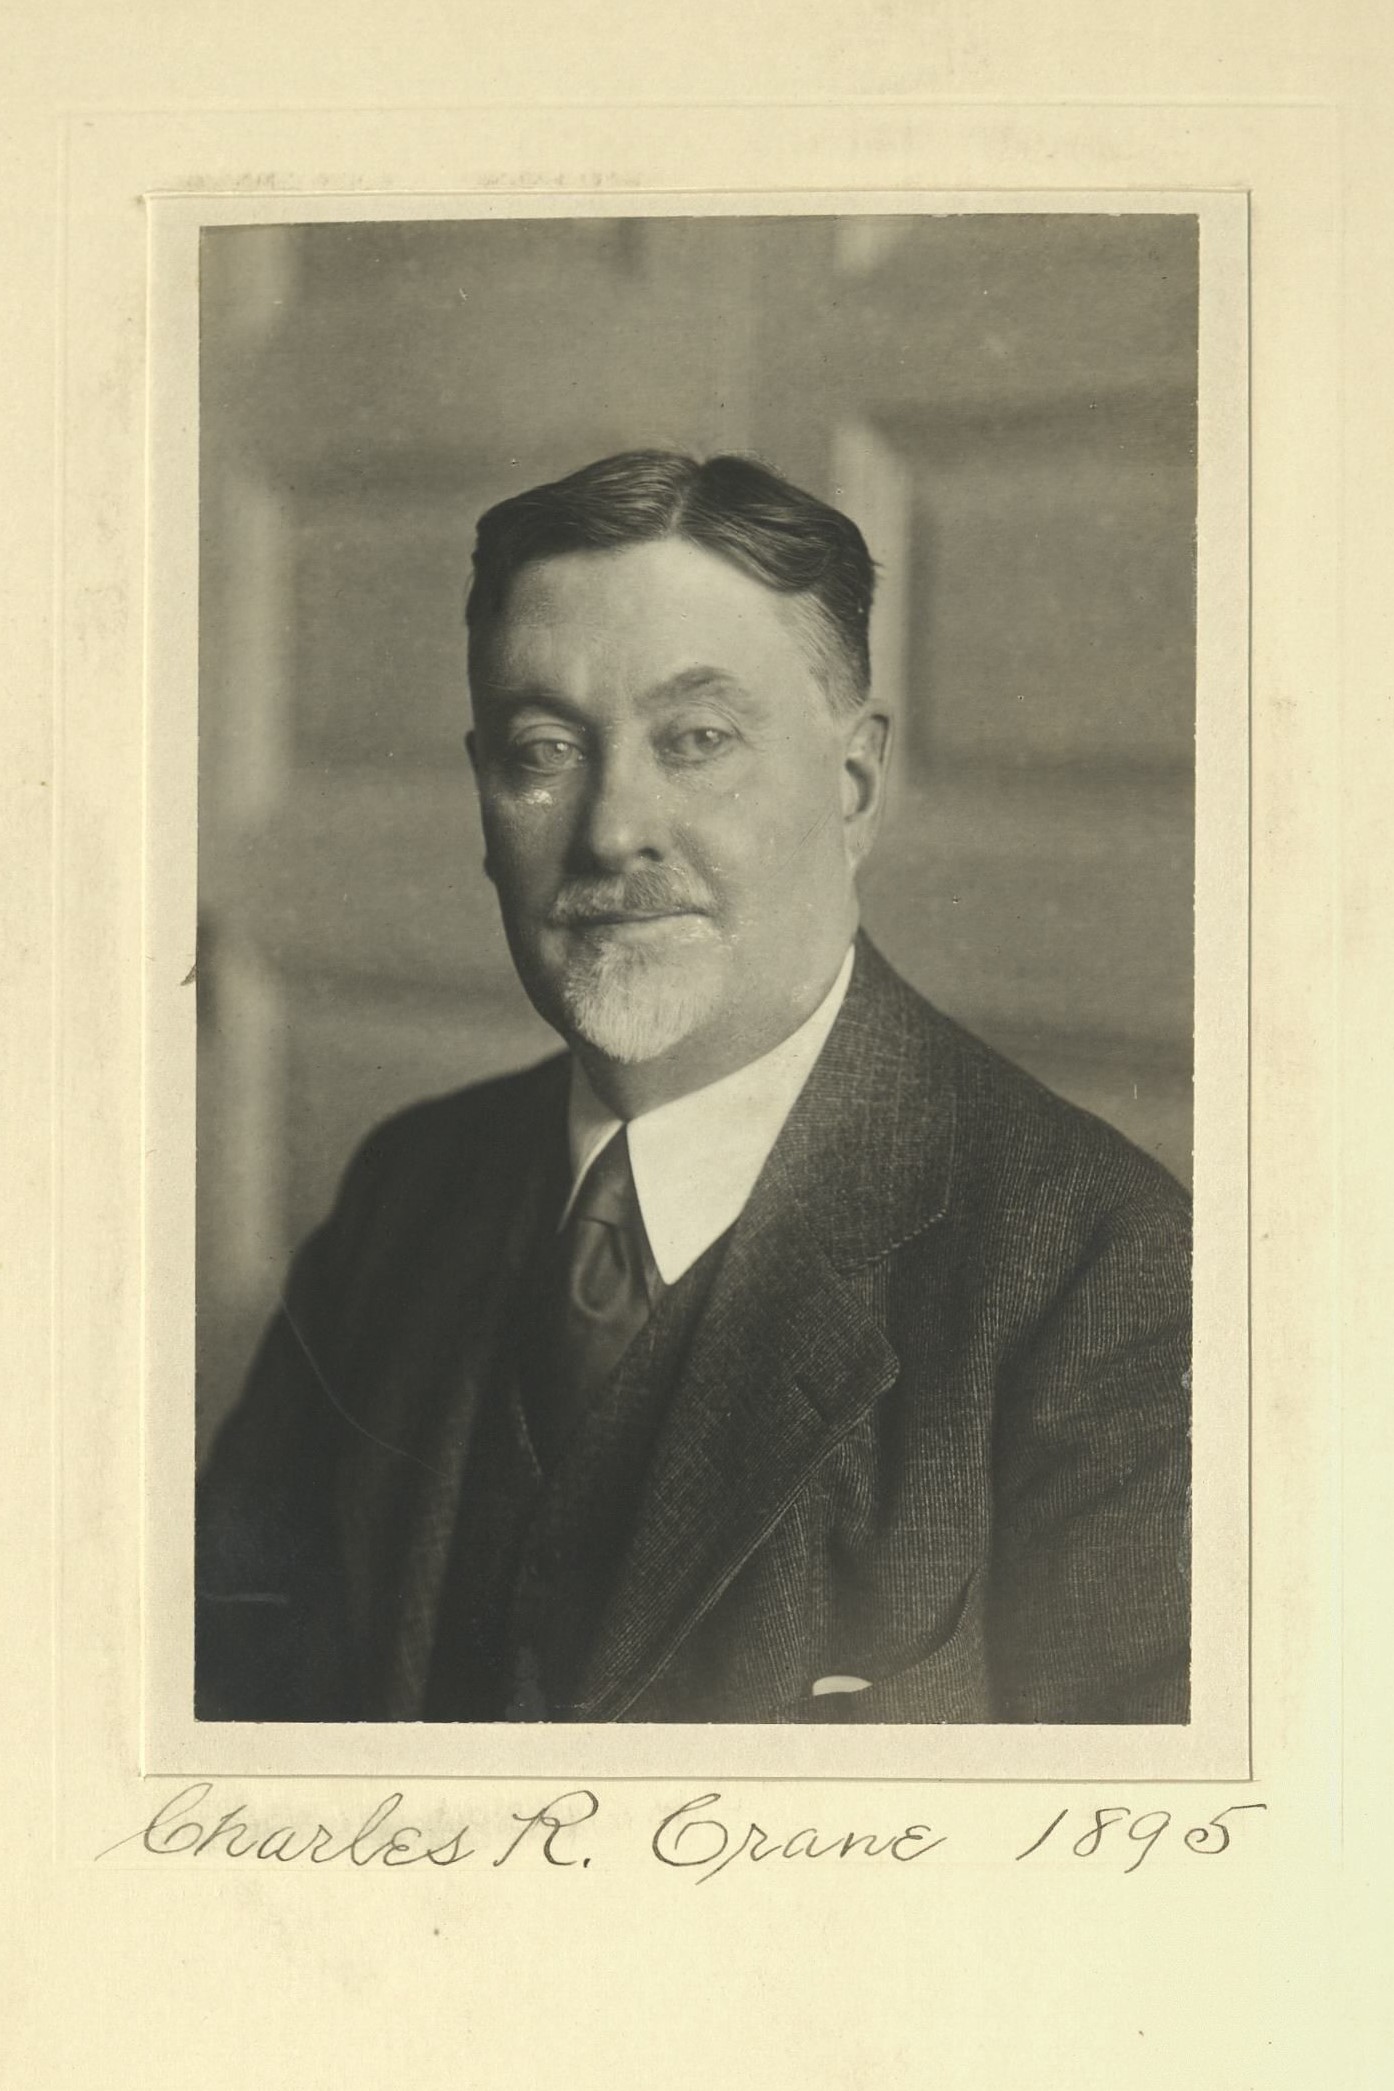 Member portrait of Charles R. Crane